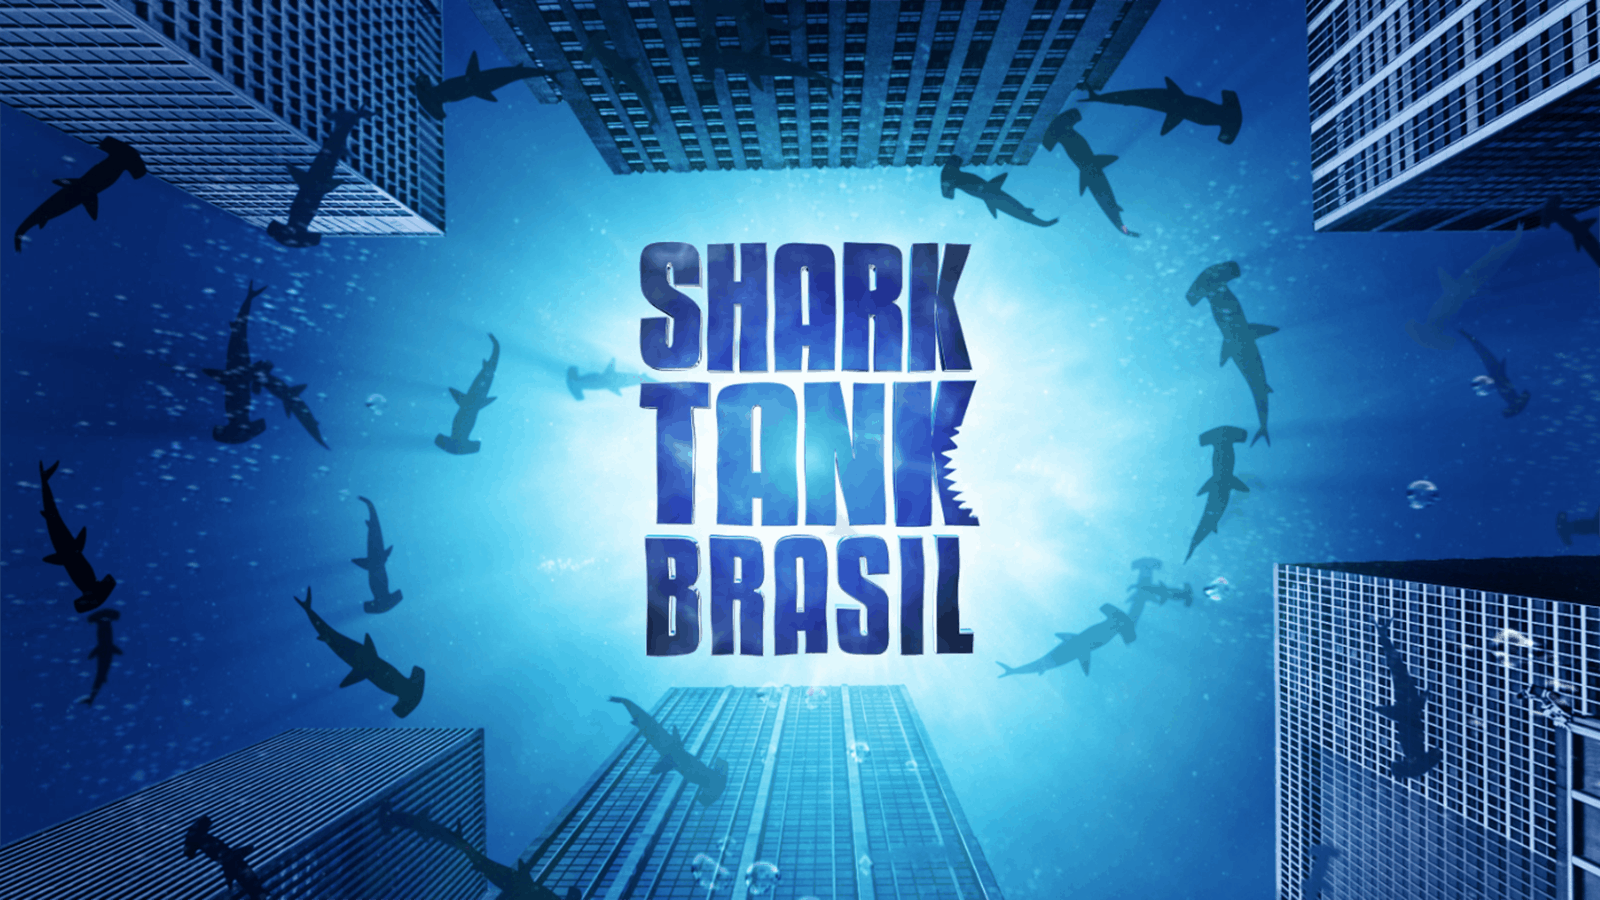 "Shark Tank Brasil" rende bons índices de audiência ao canal Sony